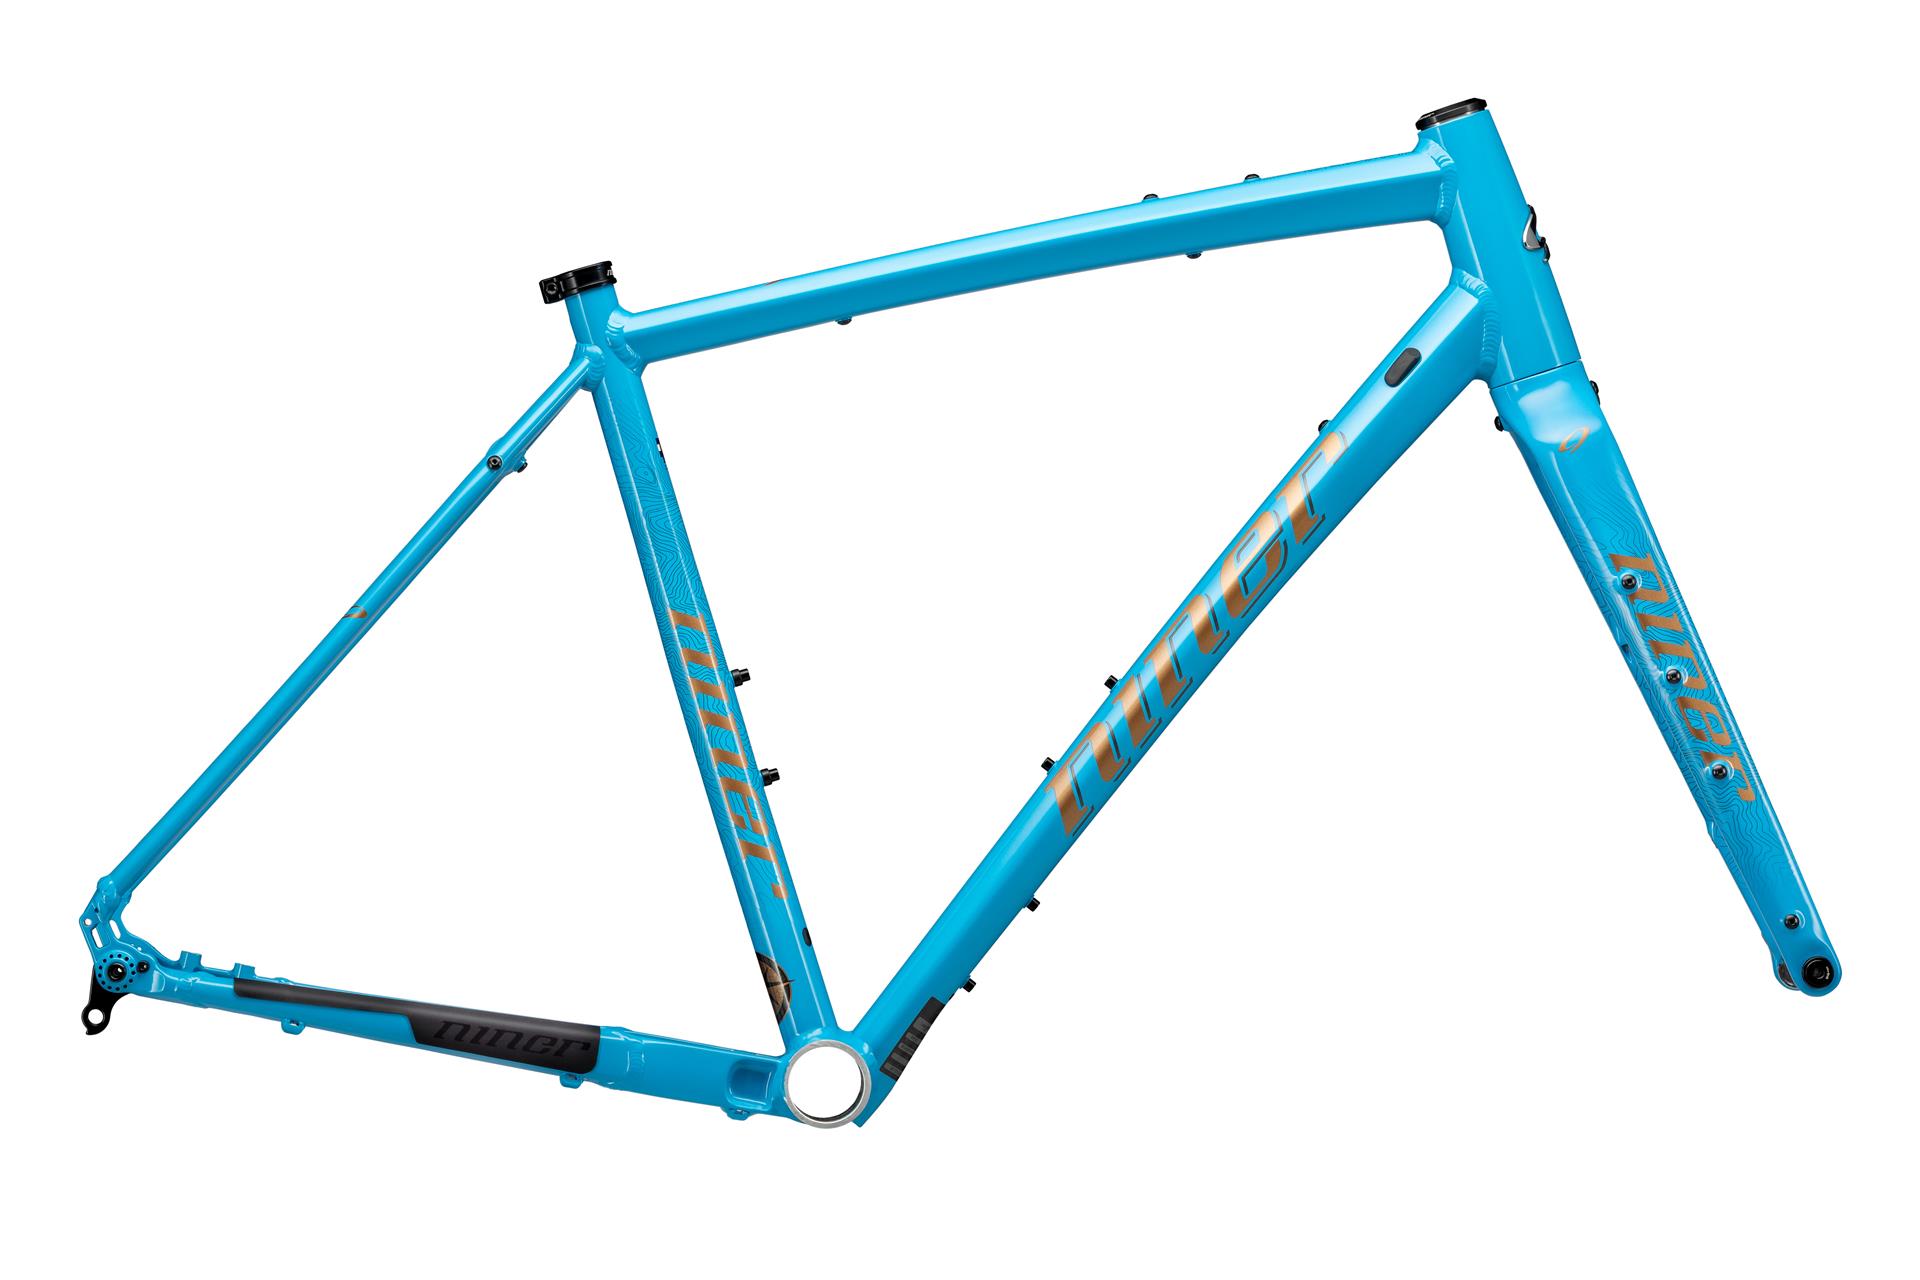 Niner RLT 4-star велосипед, серый/голубой, 53